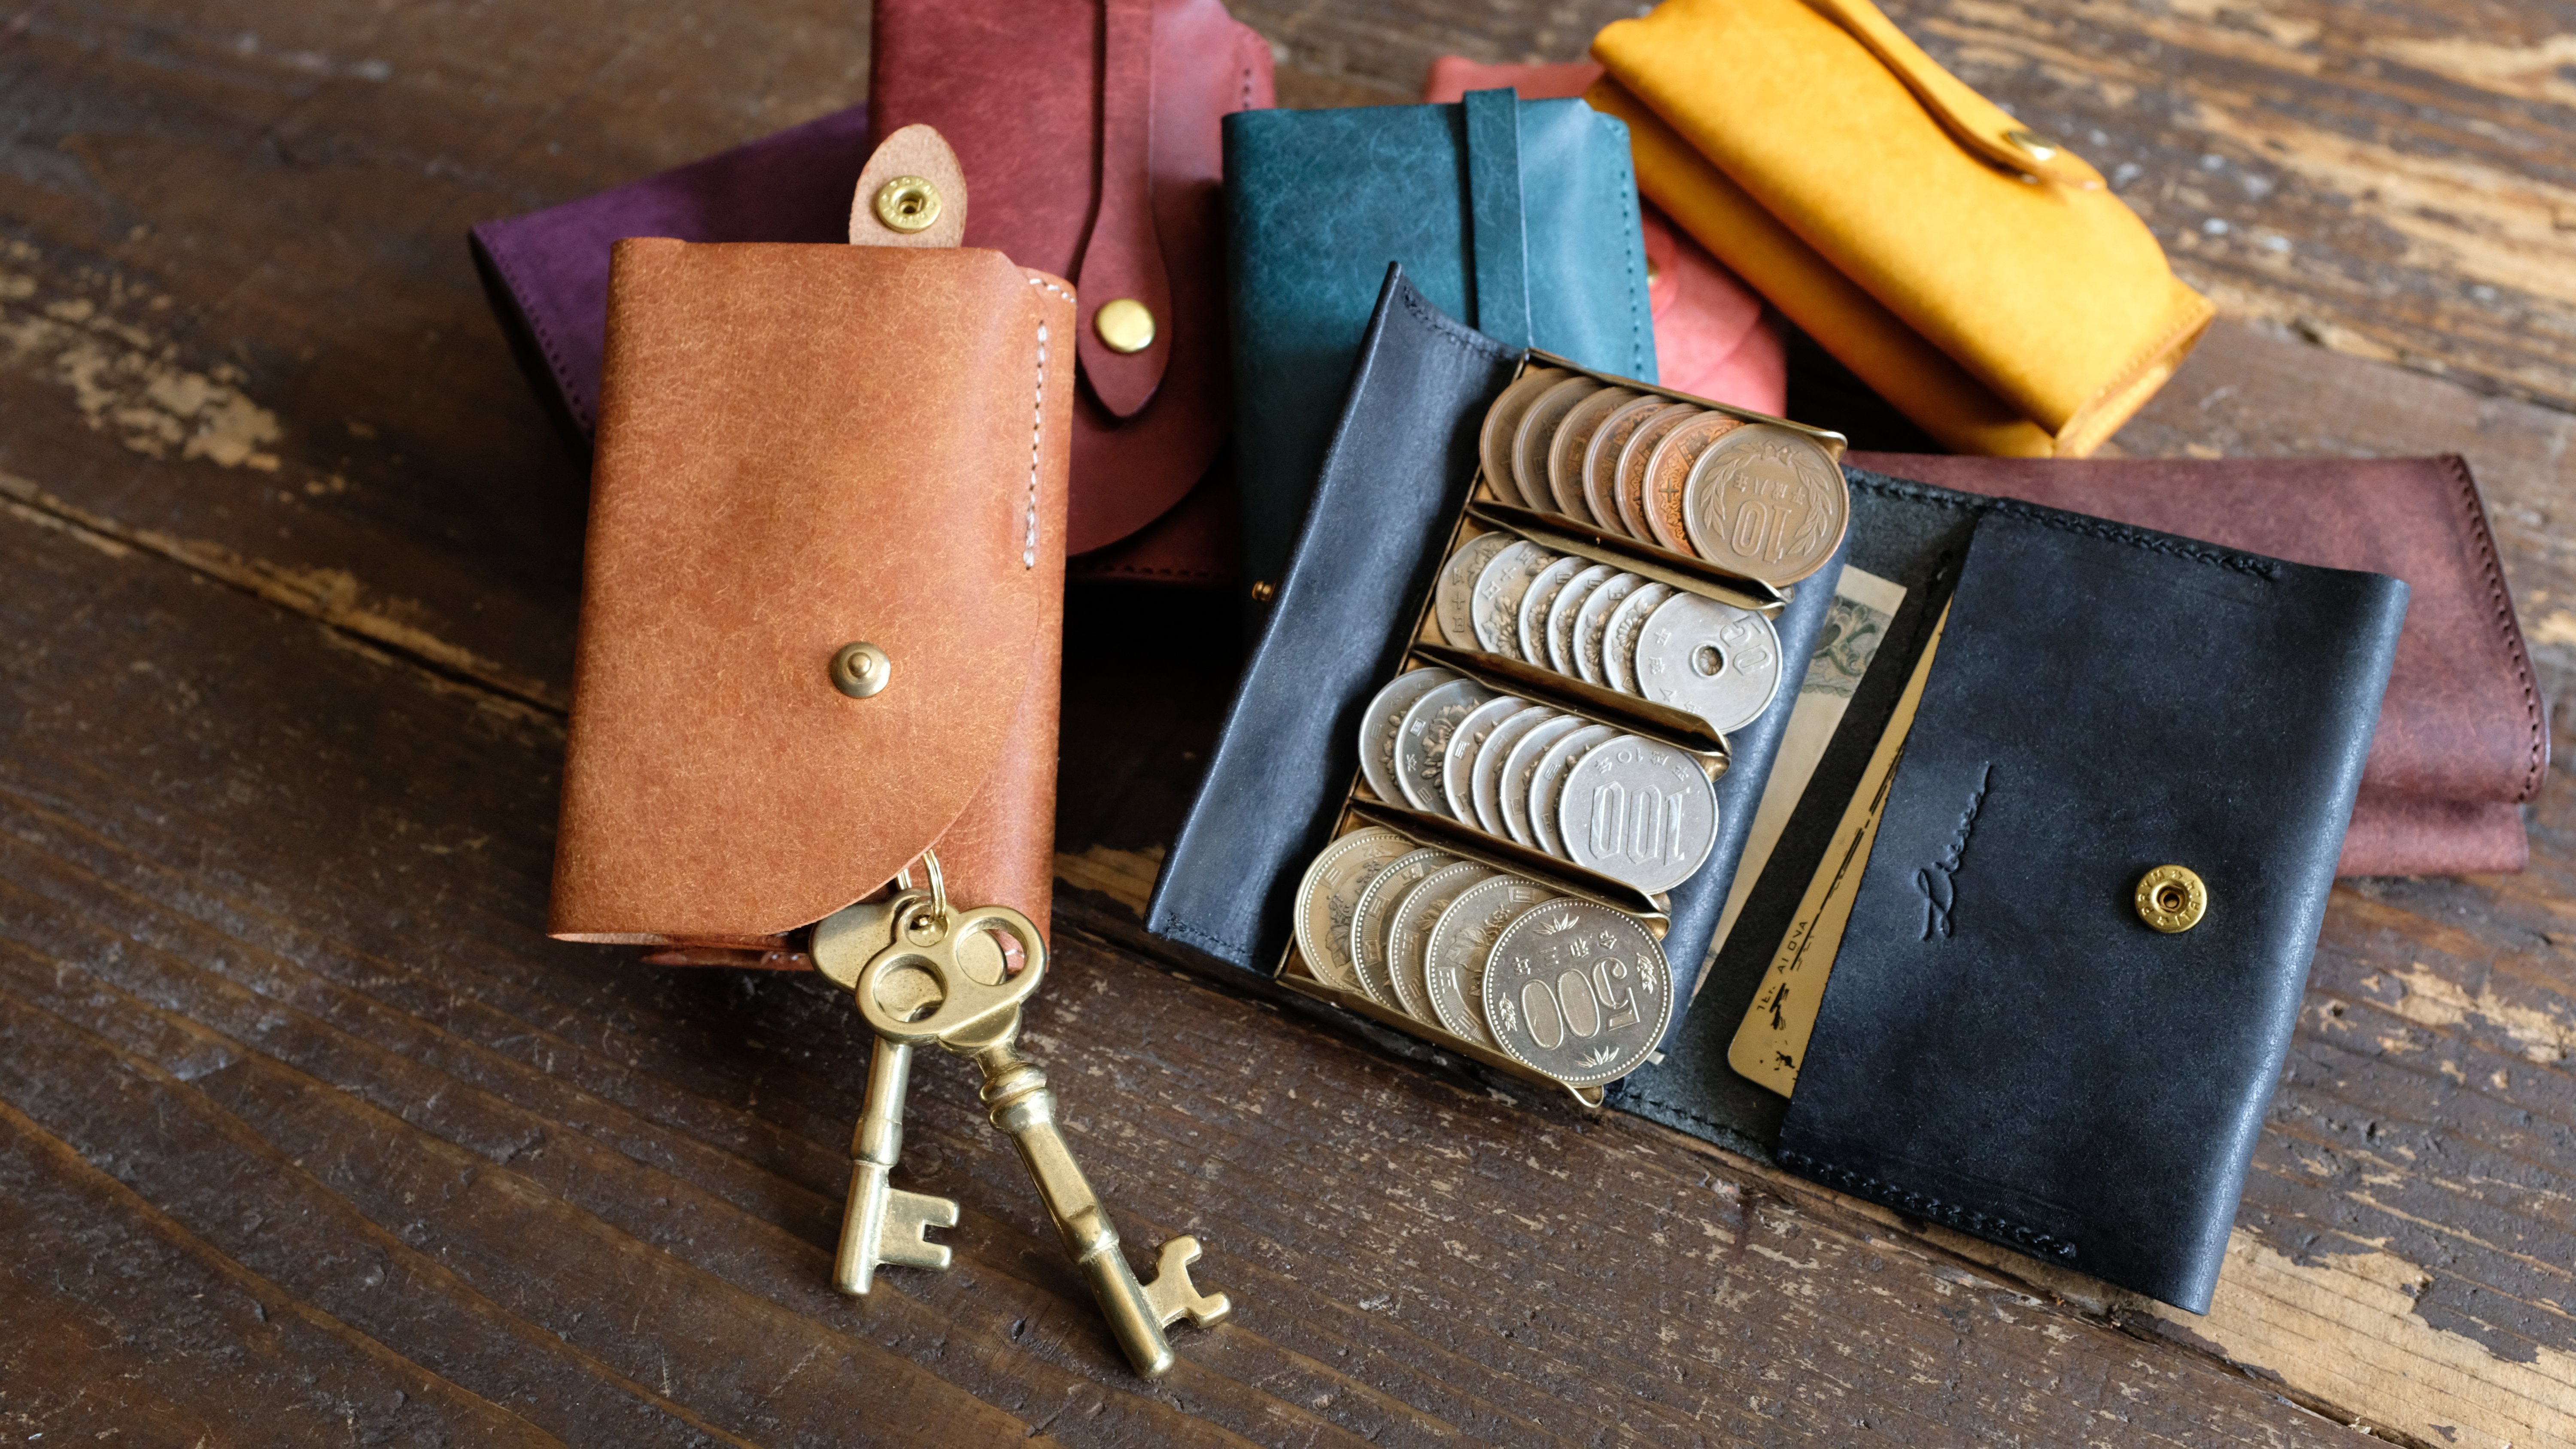 Coin Wallet4 大切なもの入れ・コインキャッチャー財布とキーケースを